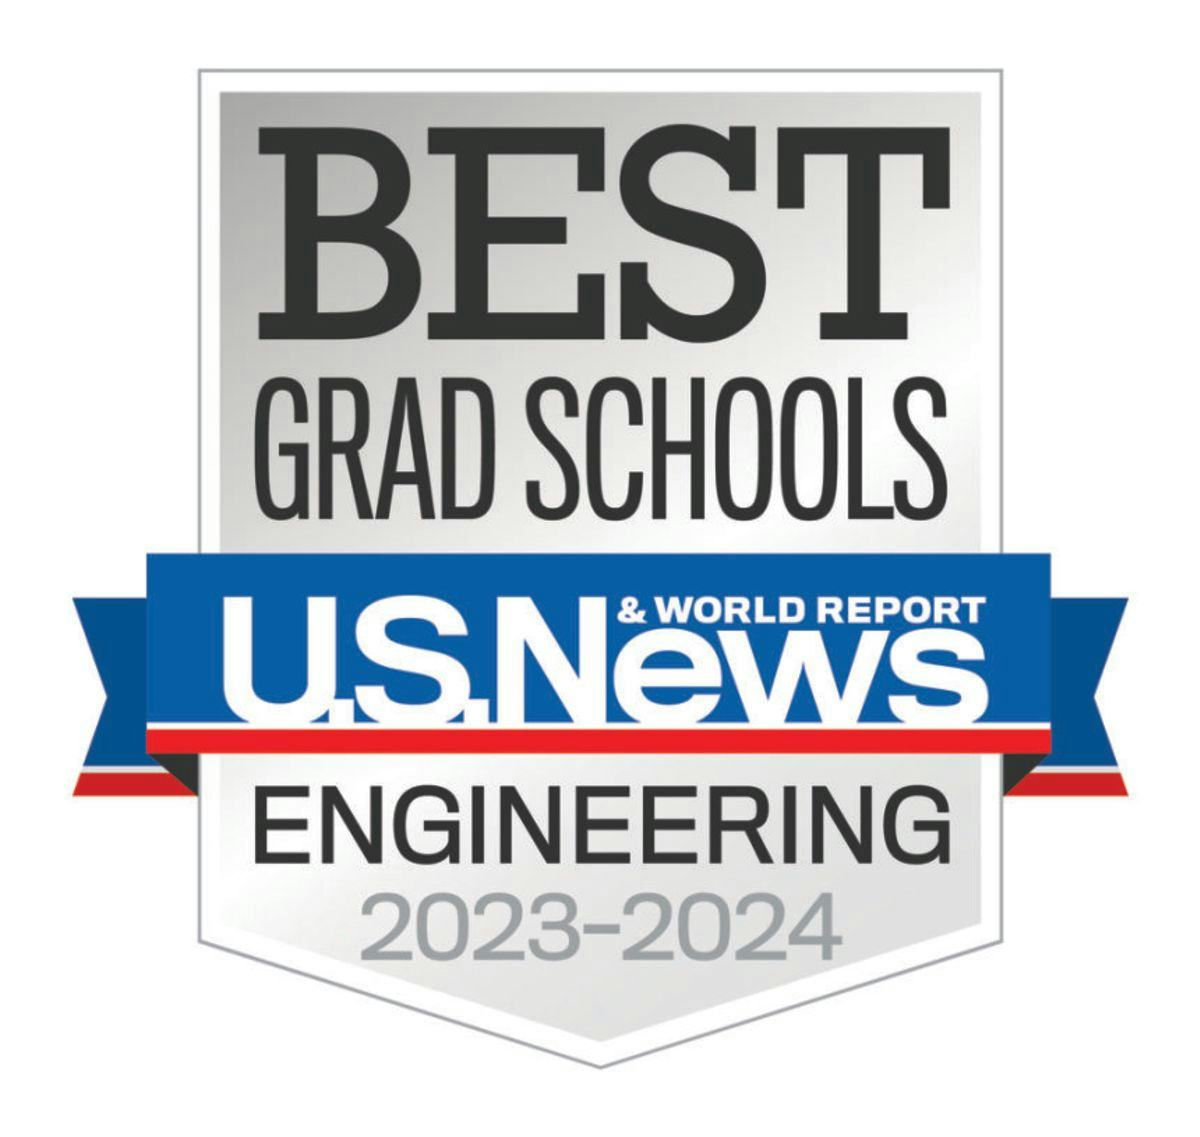 Best Grad Schools U.S. News & World Report - Engineering 2023-2024